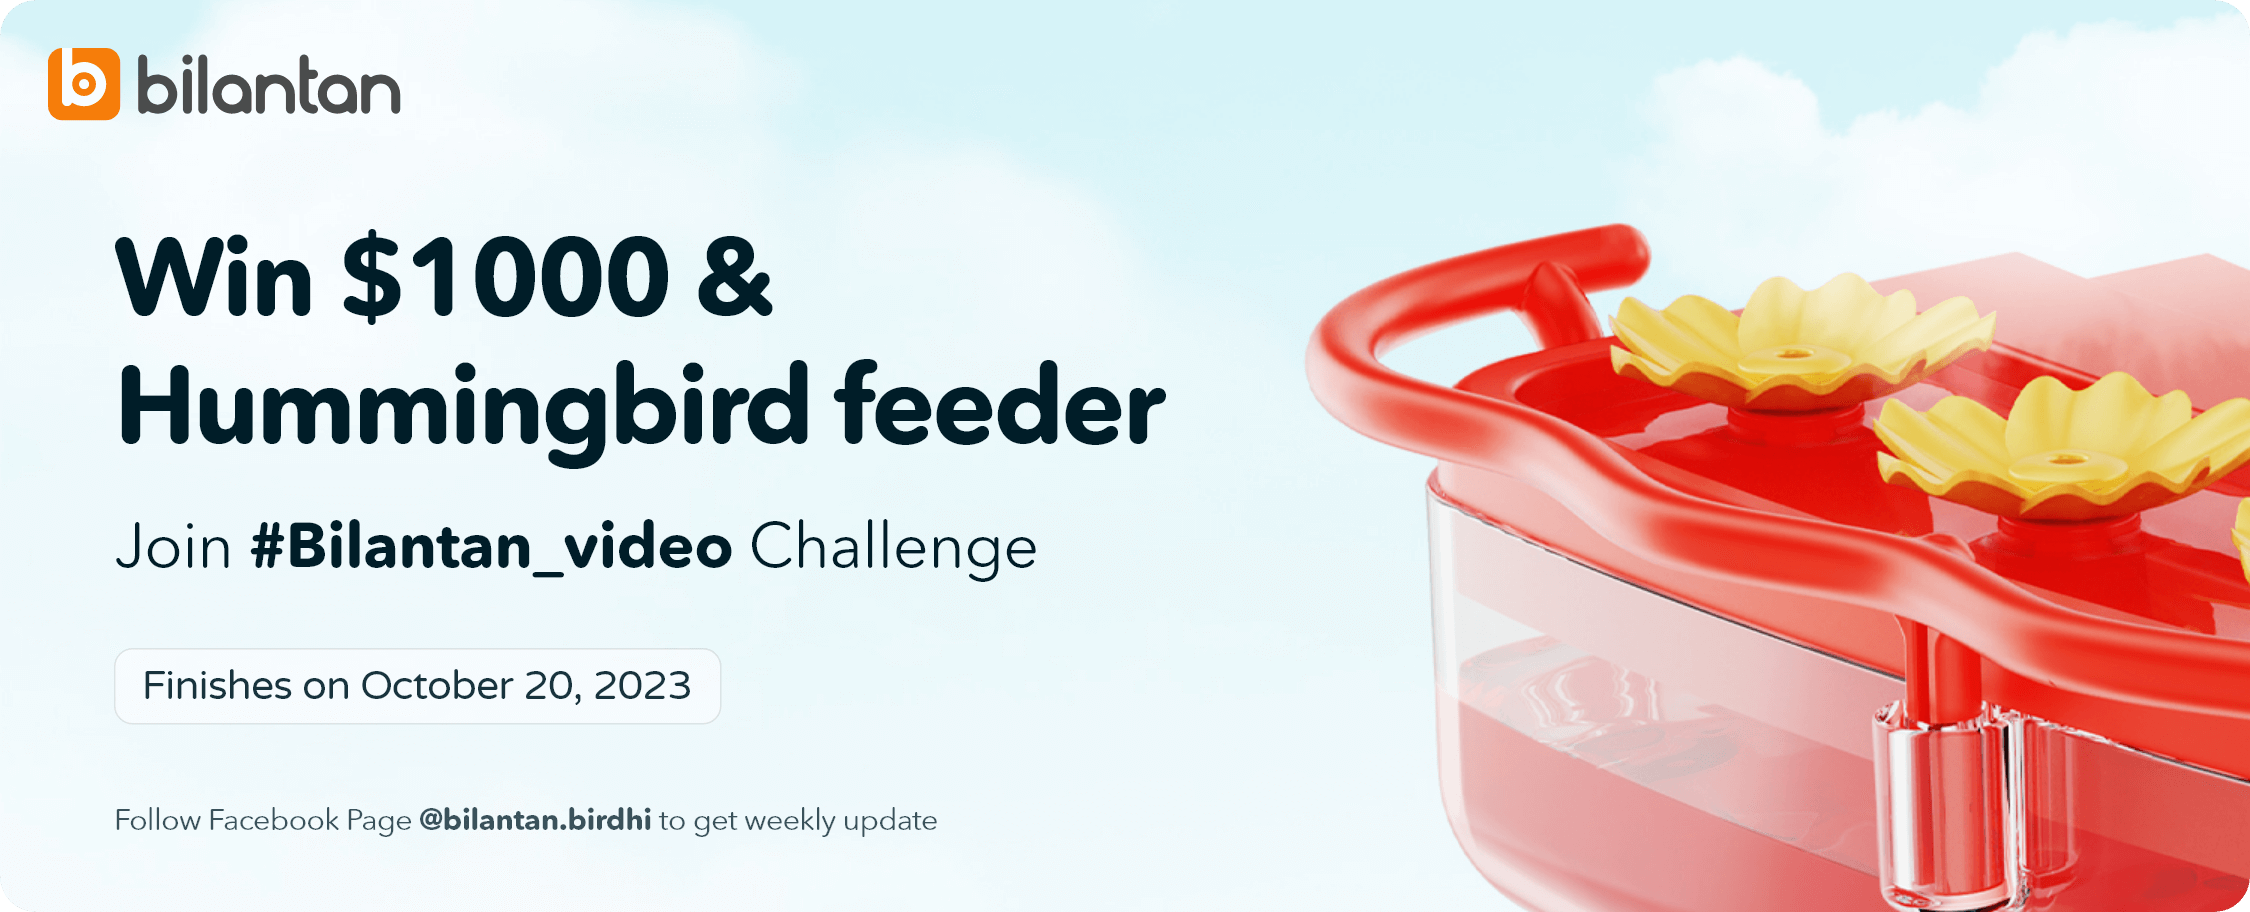 Win $1000 & Hummingbird feeder Join #Bilantan_video Challenge. Finishes on October 20, 2023. Follow Facebook Page @bilantan.birdhi to get a weekly update.